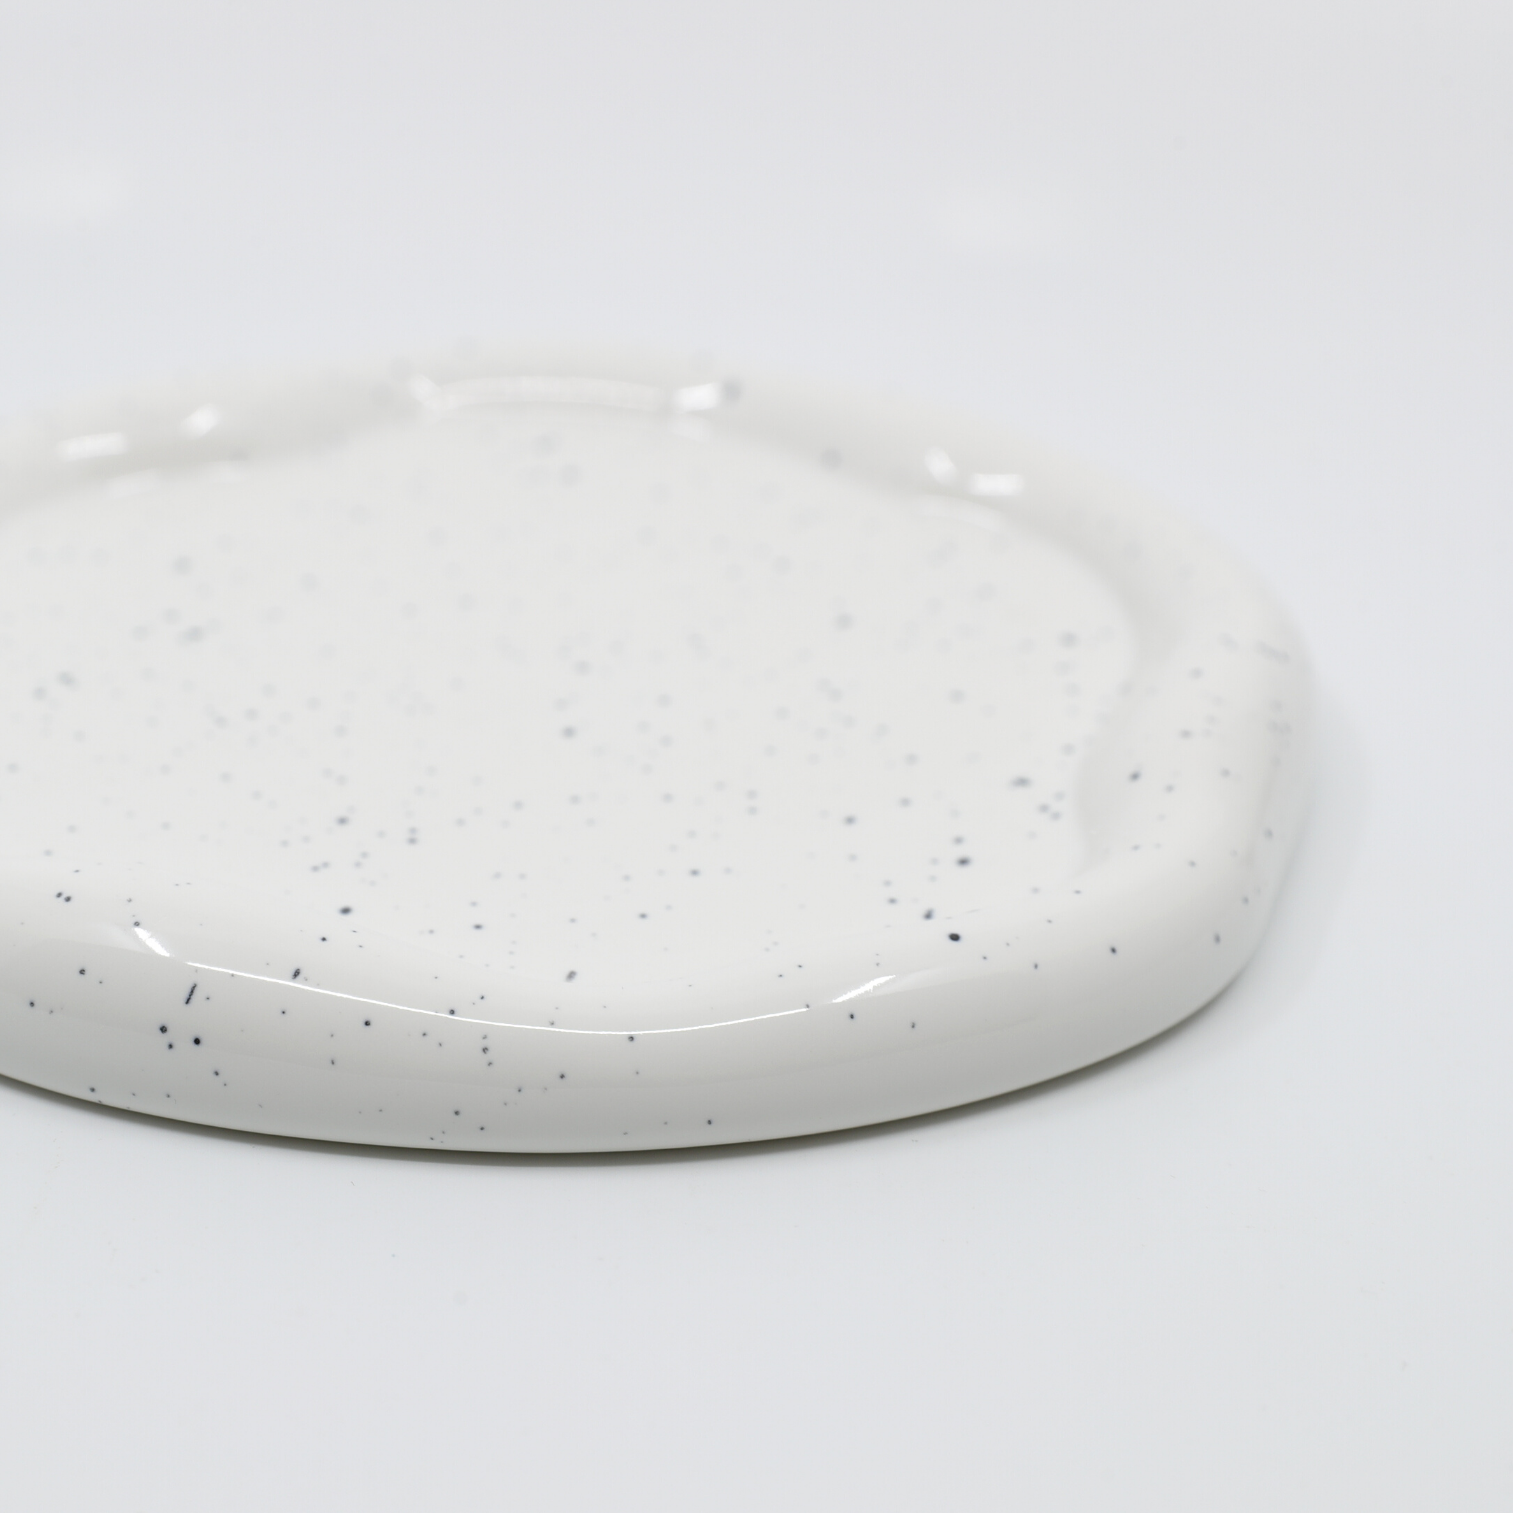 Warbled Ceramic - Round Speckled Plate